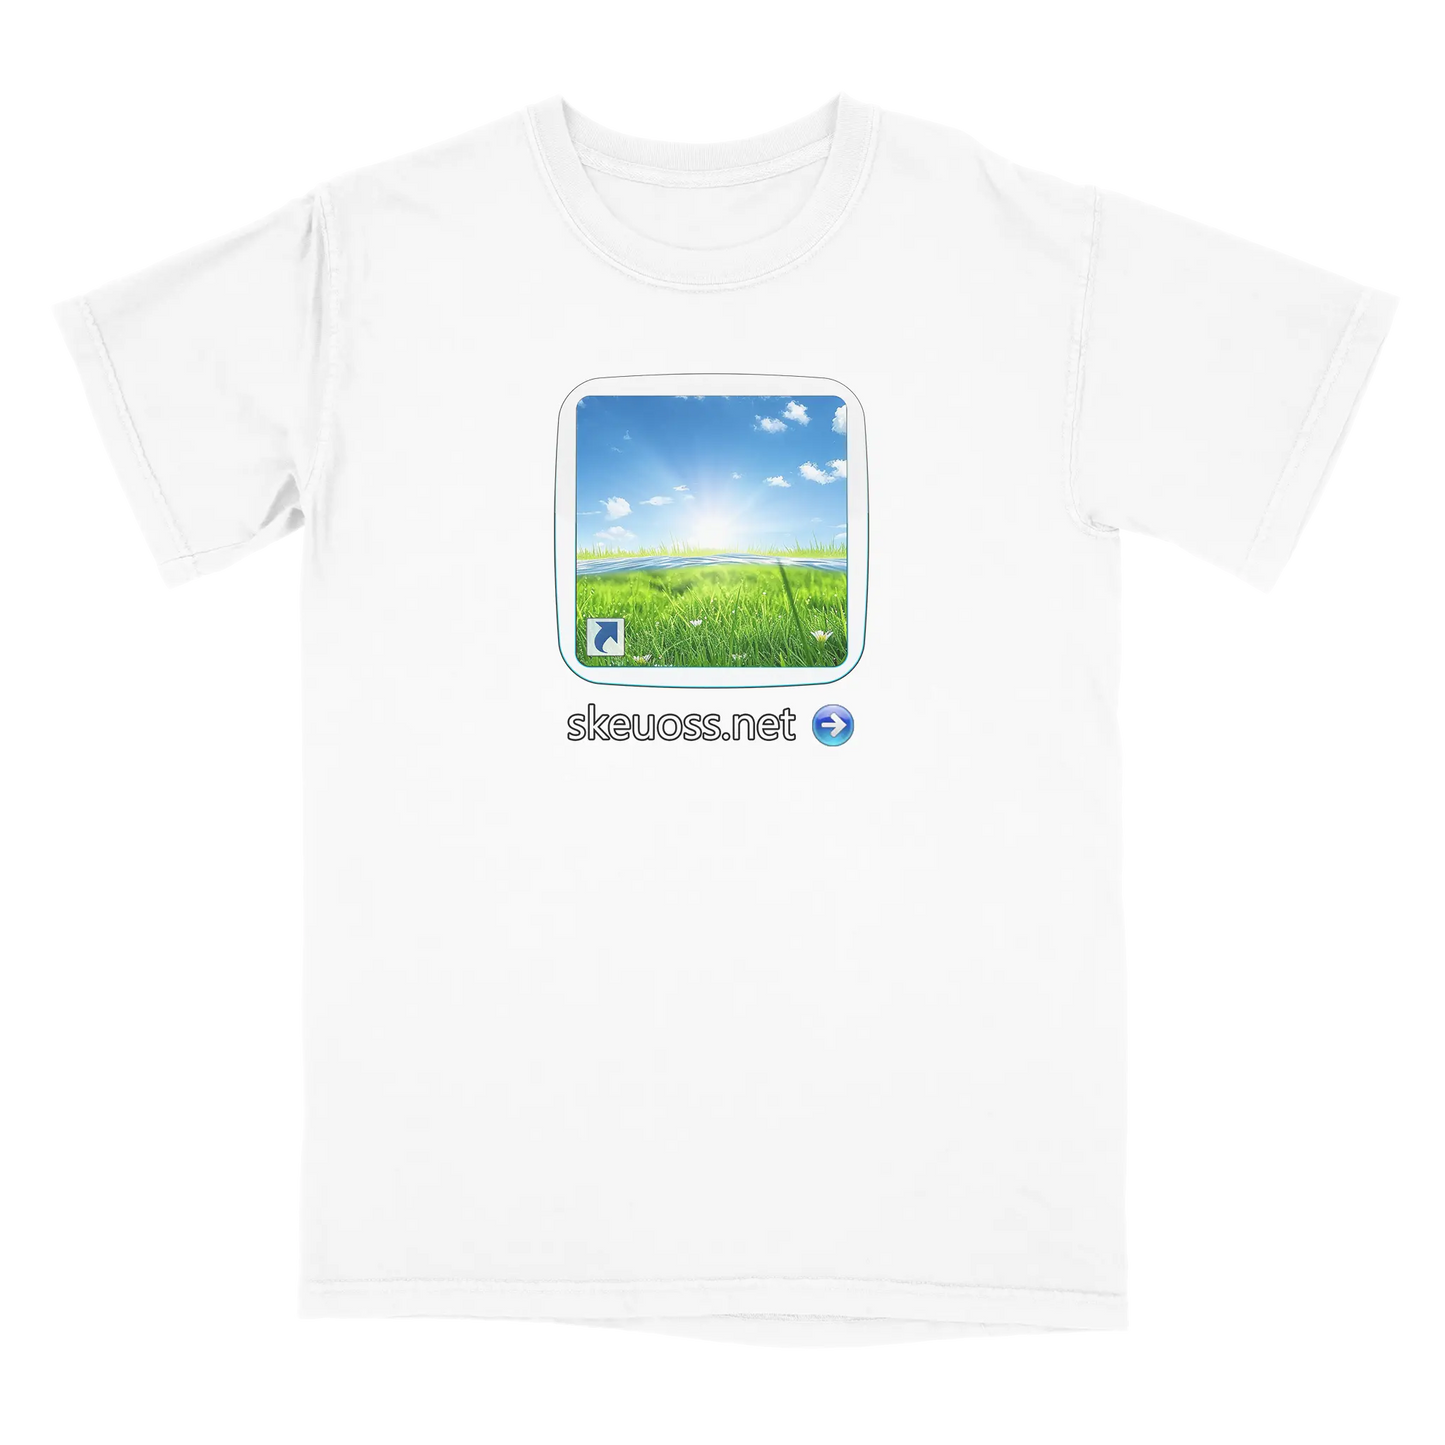 Frutiger Aero T-shirt - User Login Collection - User 307